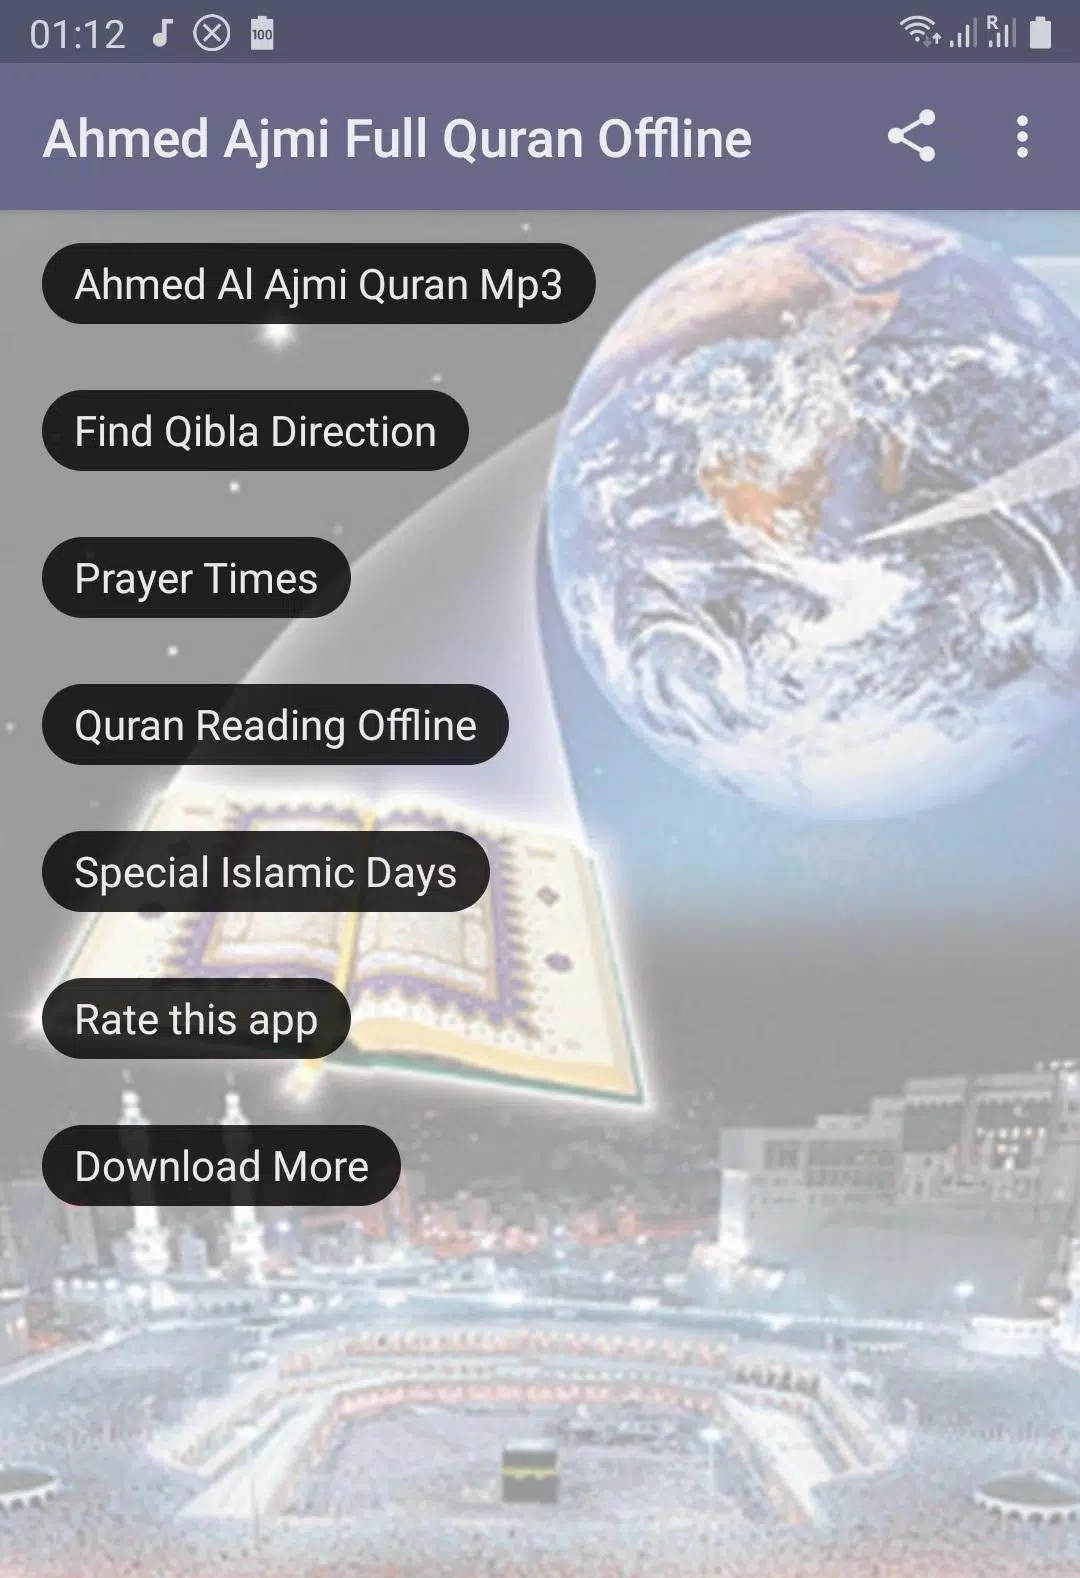 Ahmed Ajmi Full Quran Offline APK for Android Download